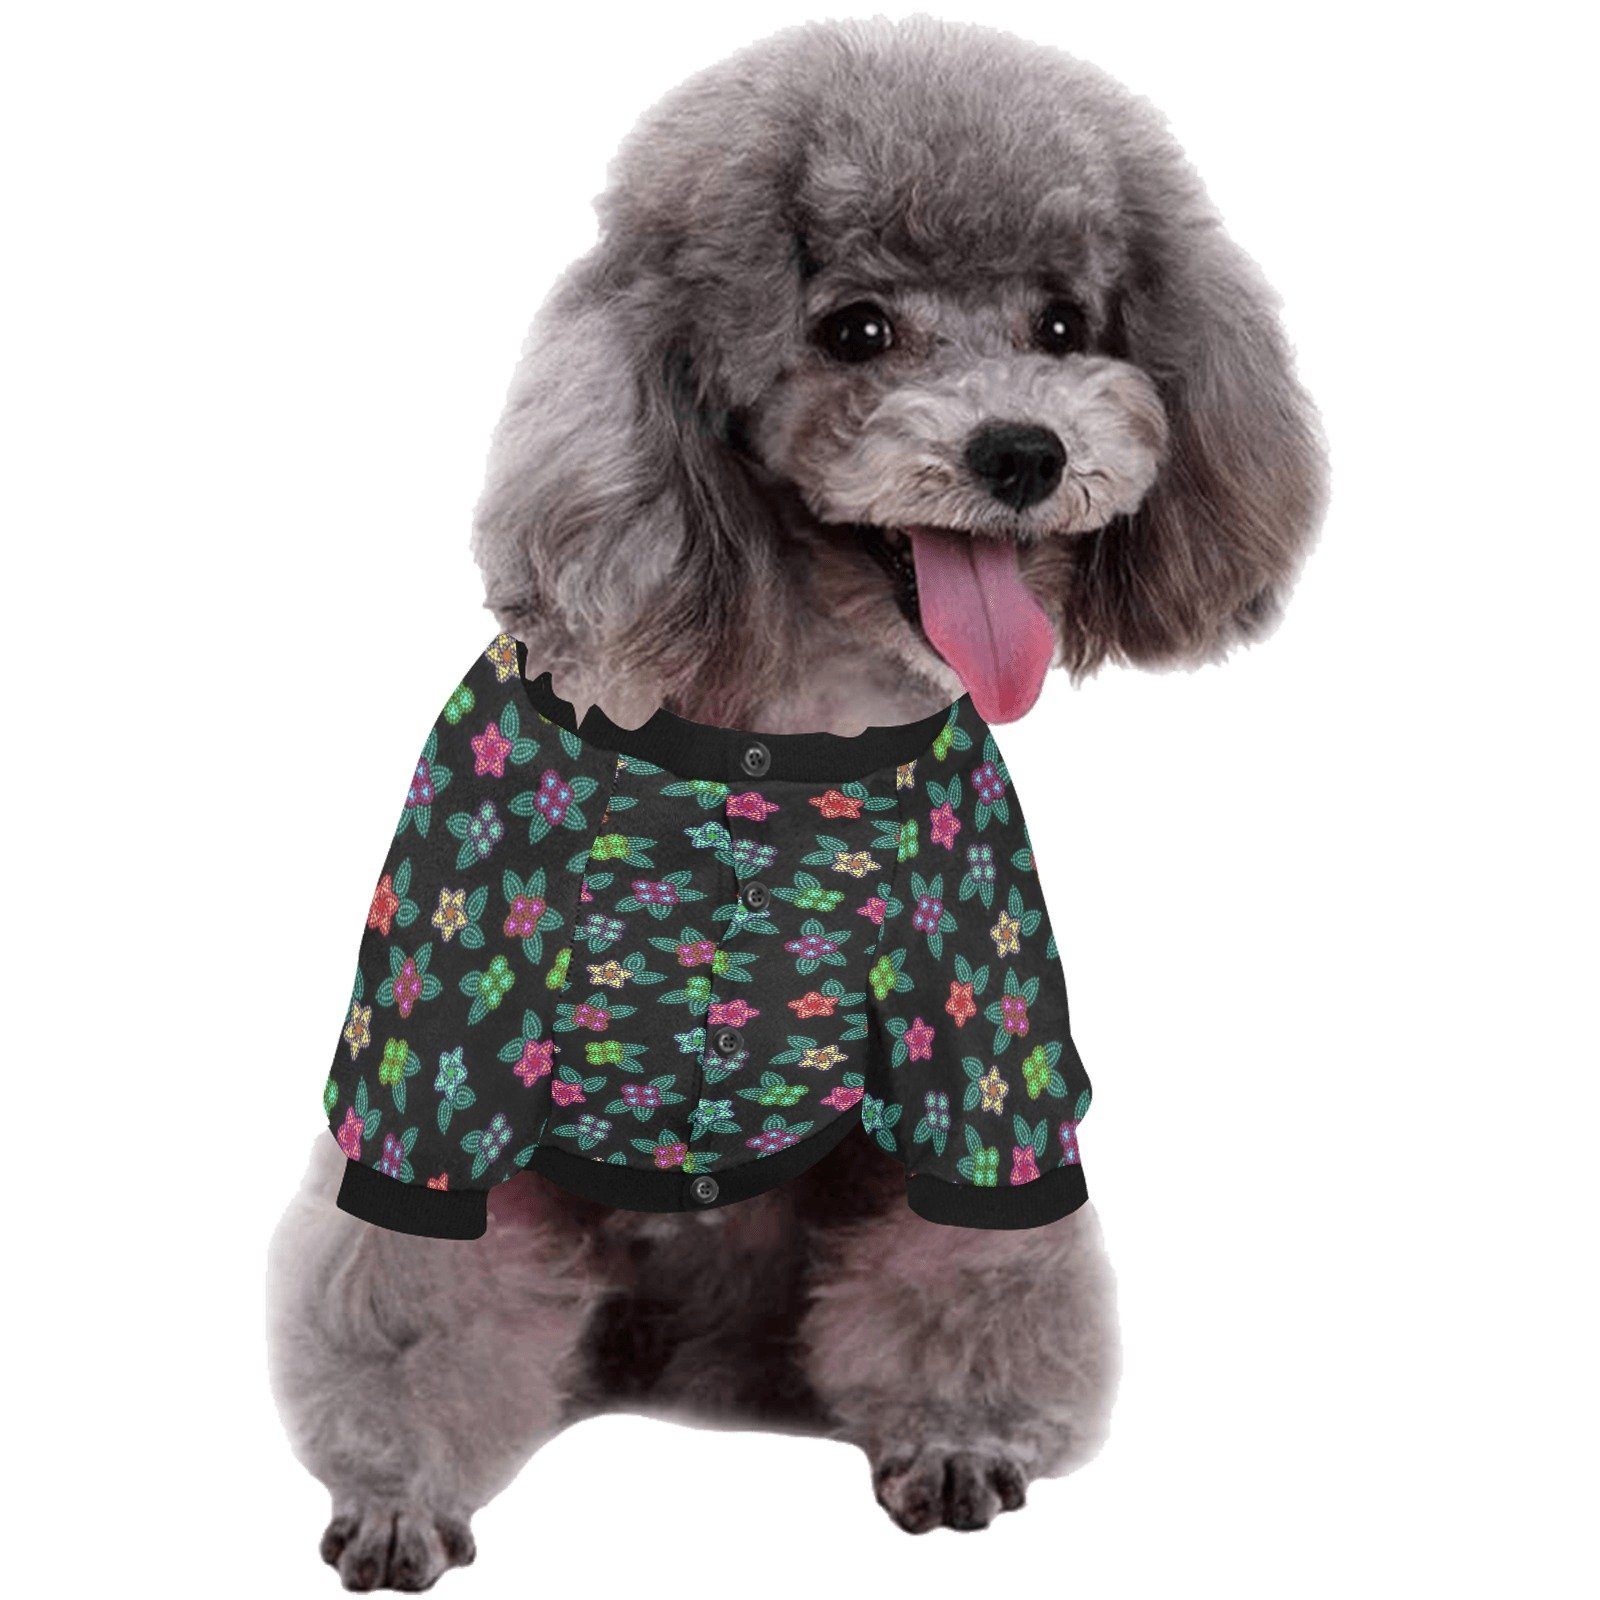 Berry Flowers Black Pet Dog Round Neck Shirt Pet Dog Round Neck Shirt e-joyer 